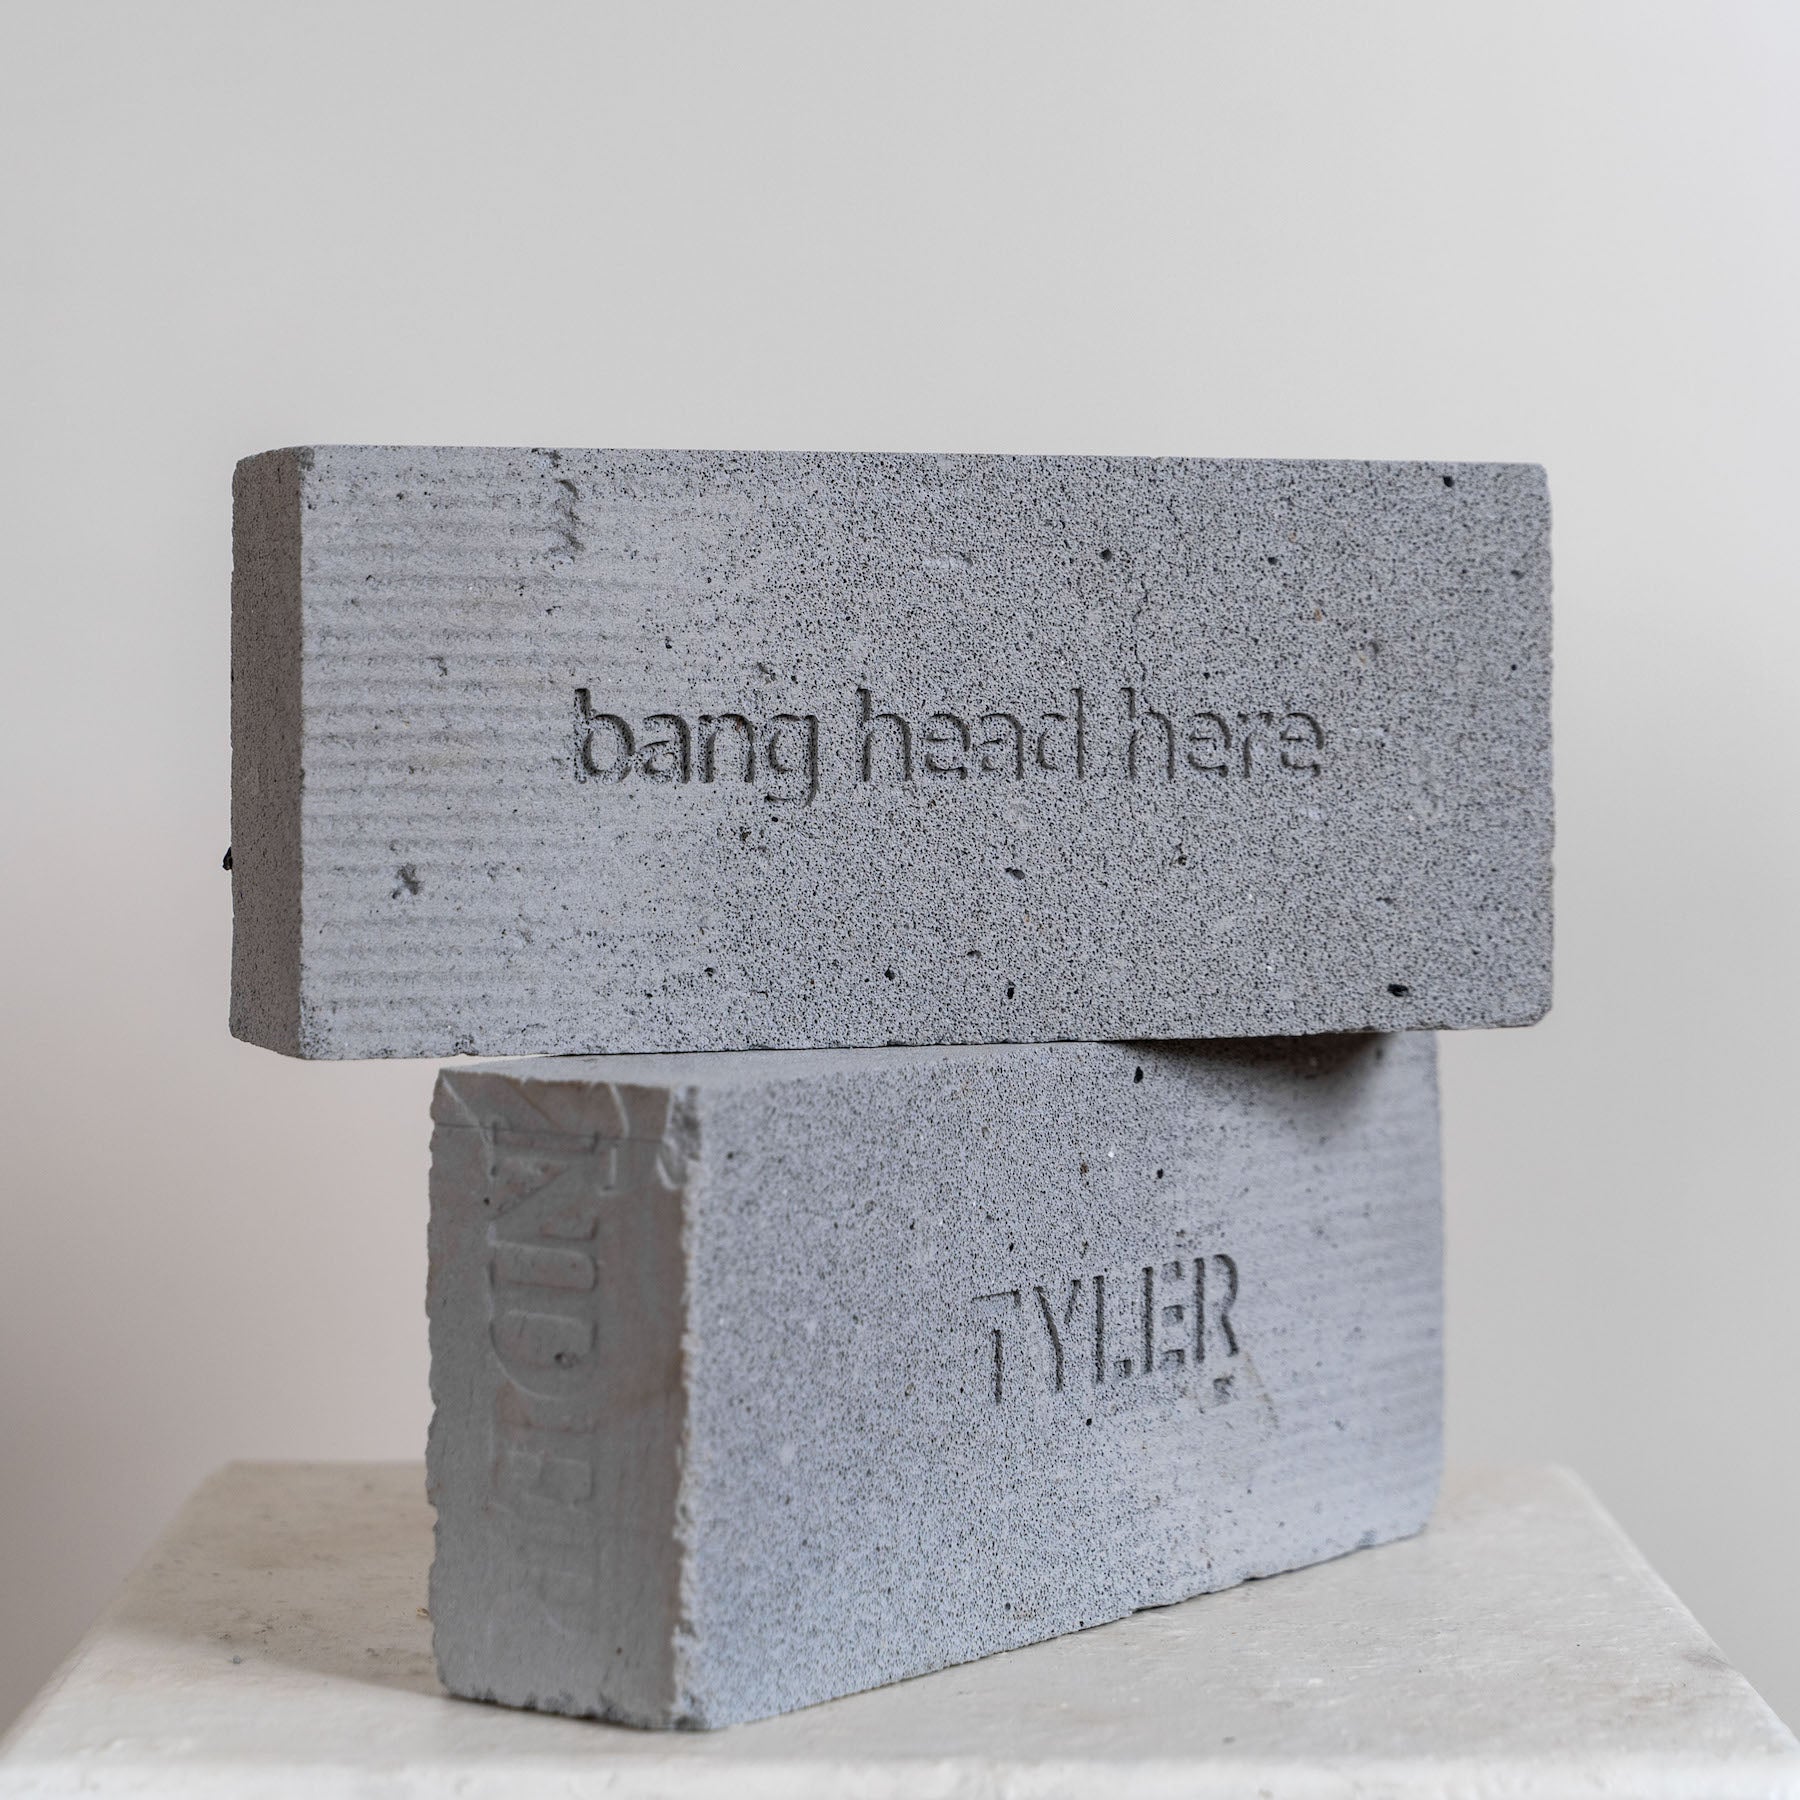 Bang Head Here | Art Brick by Tyler